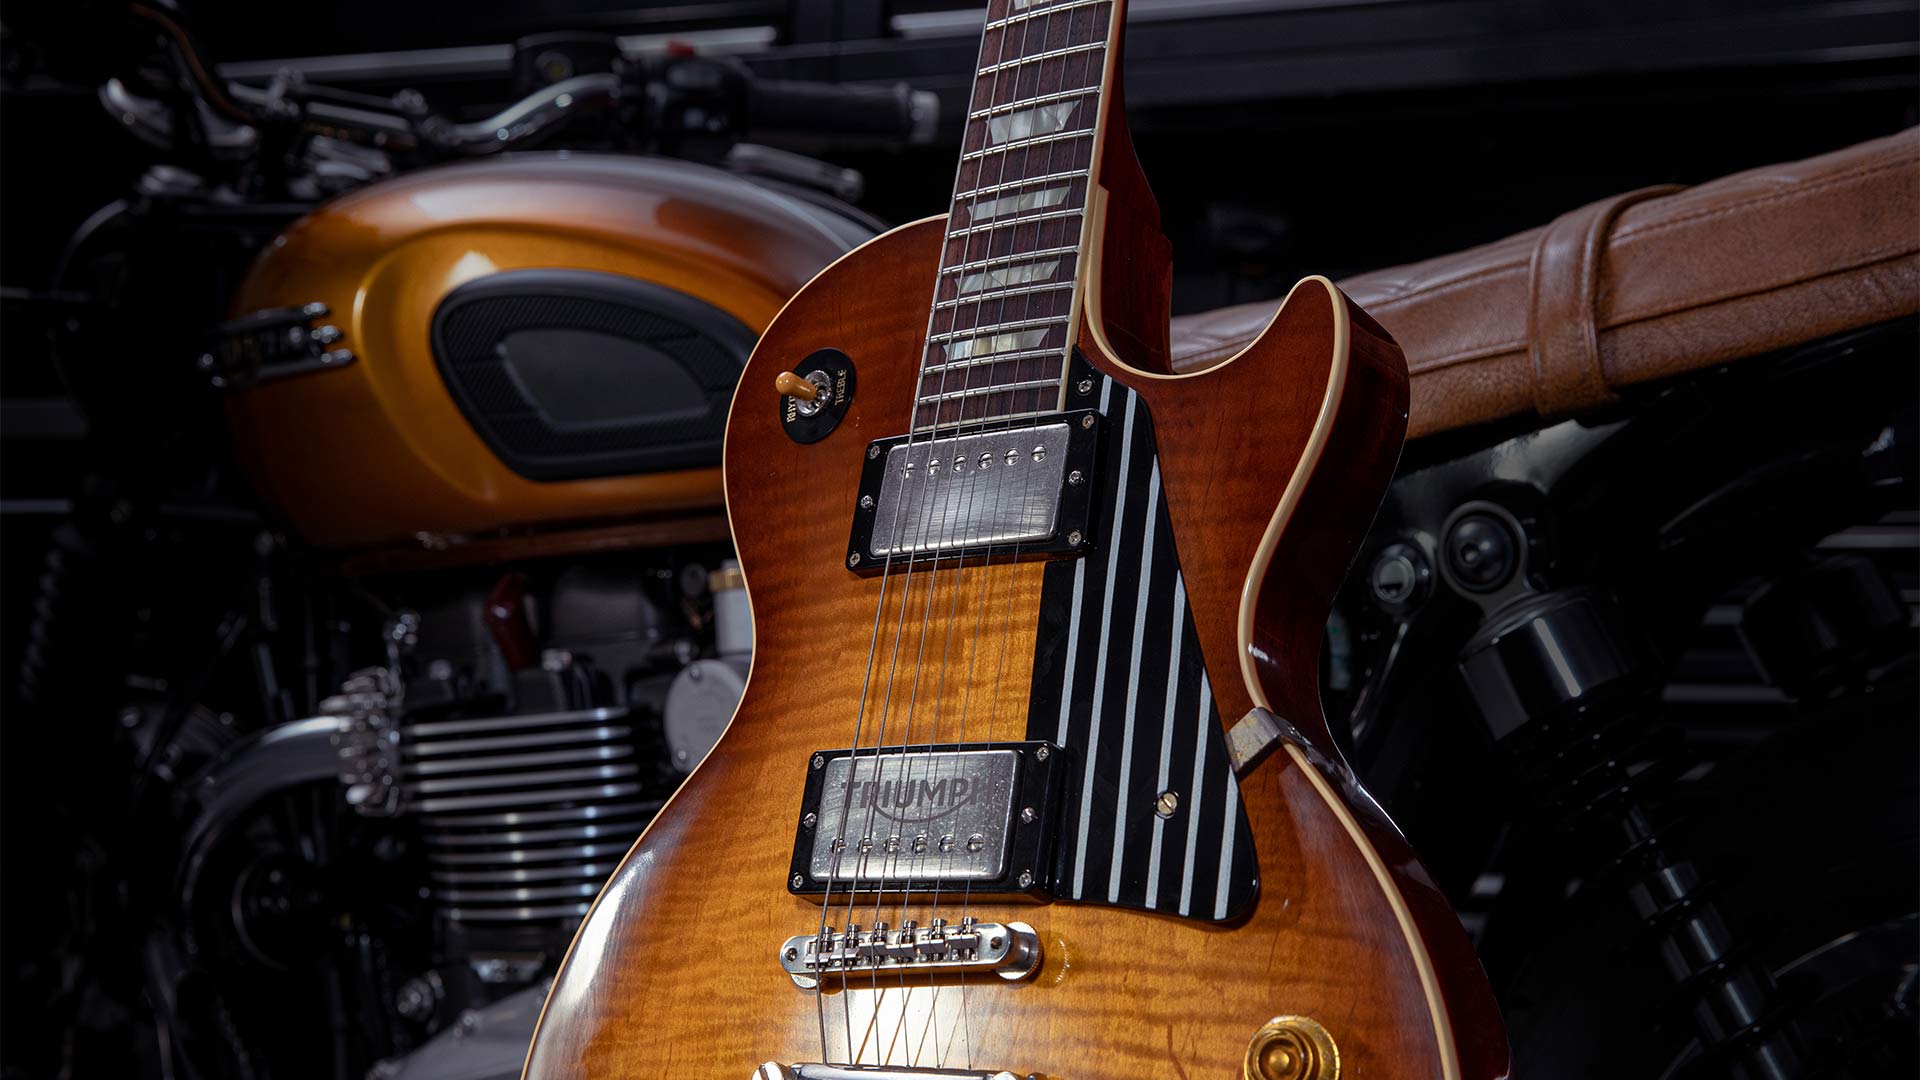 Gibson custom guitar, featuring the “Triumph Gibson 1959 Legends” partnership logo)